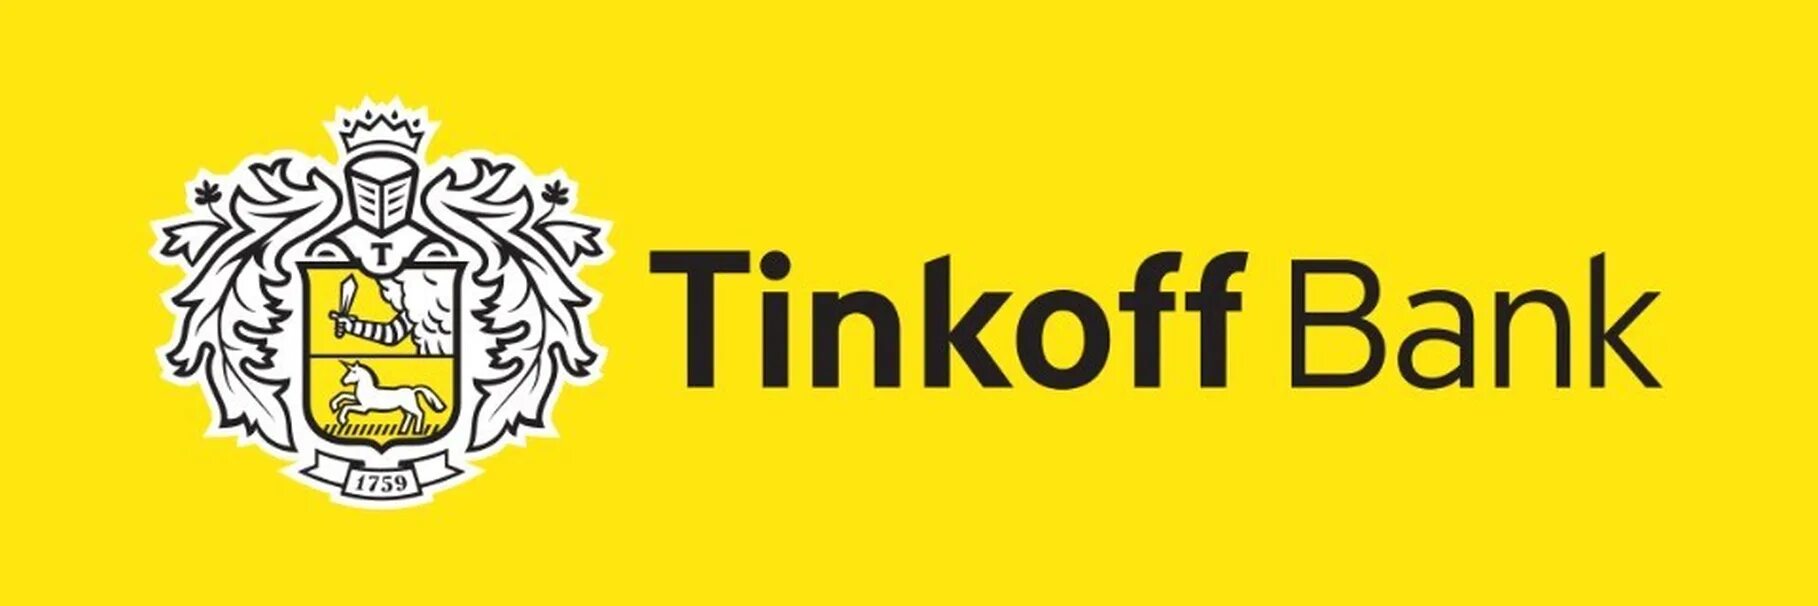 Тинькофф банк барнаул. Тинькофф банк лого. Tinkoff логотип. Прозрачный логотип тинькофф. Картинка тинькофф банк.